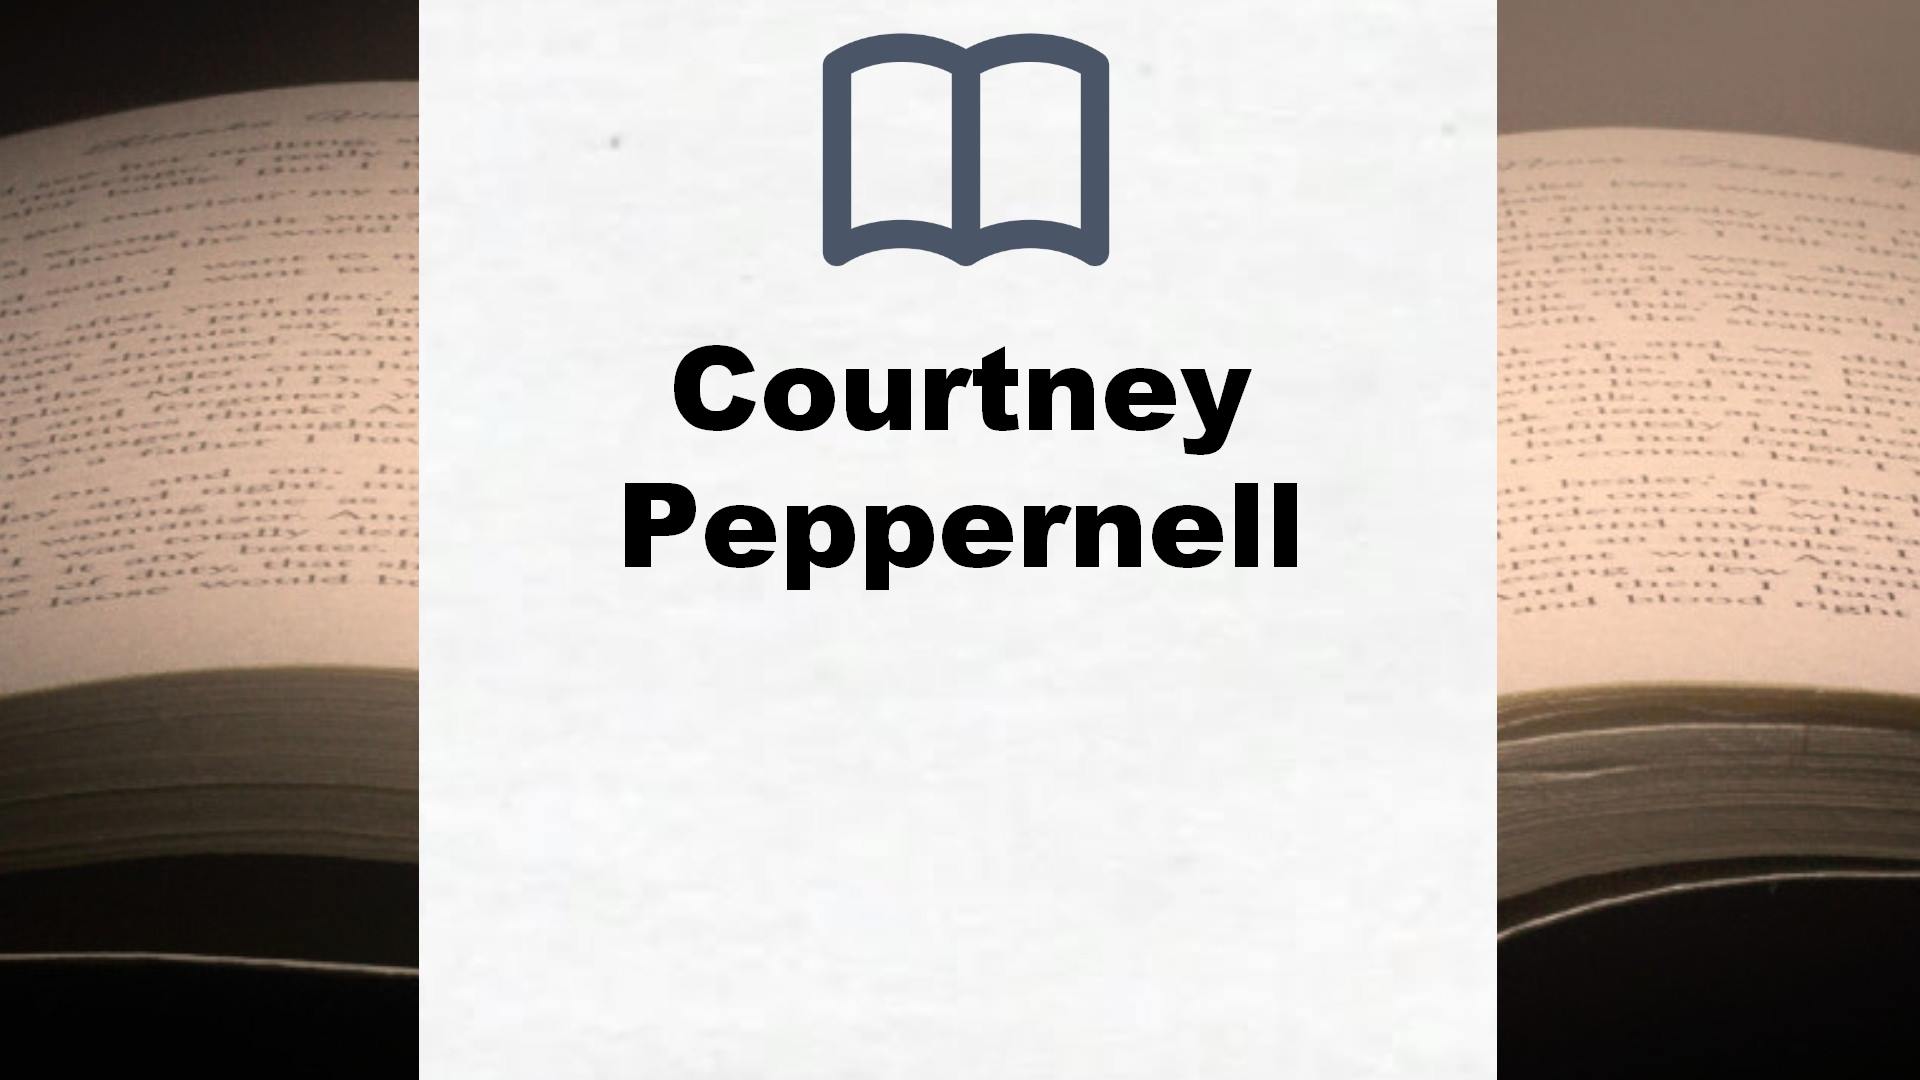 Courtney Peppernell Bücher